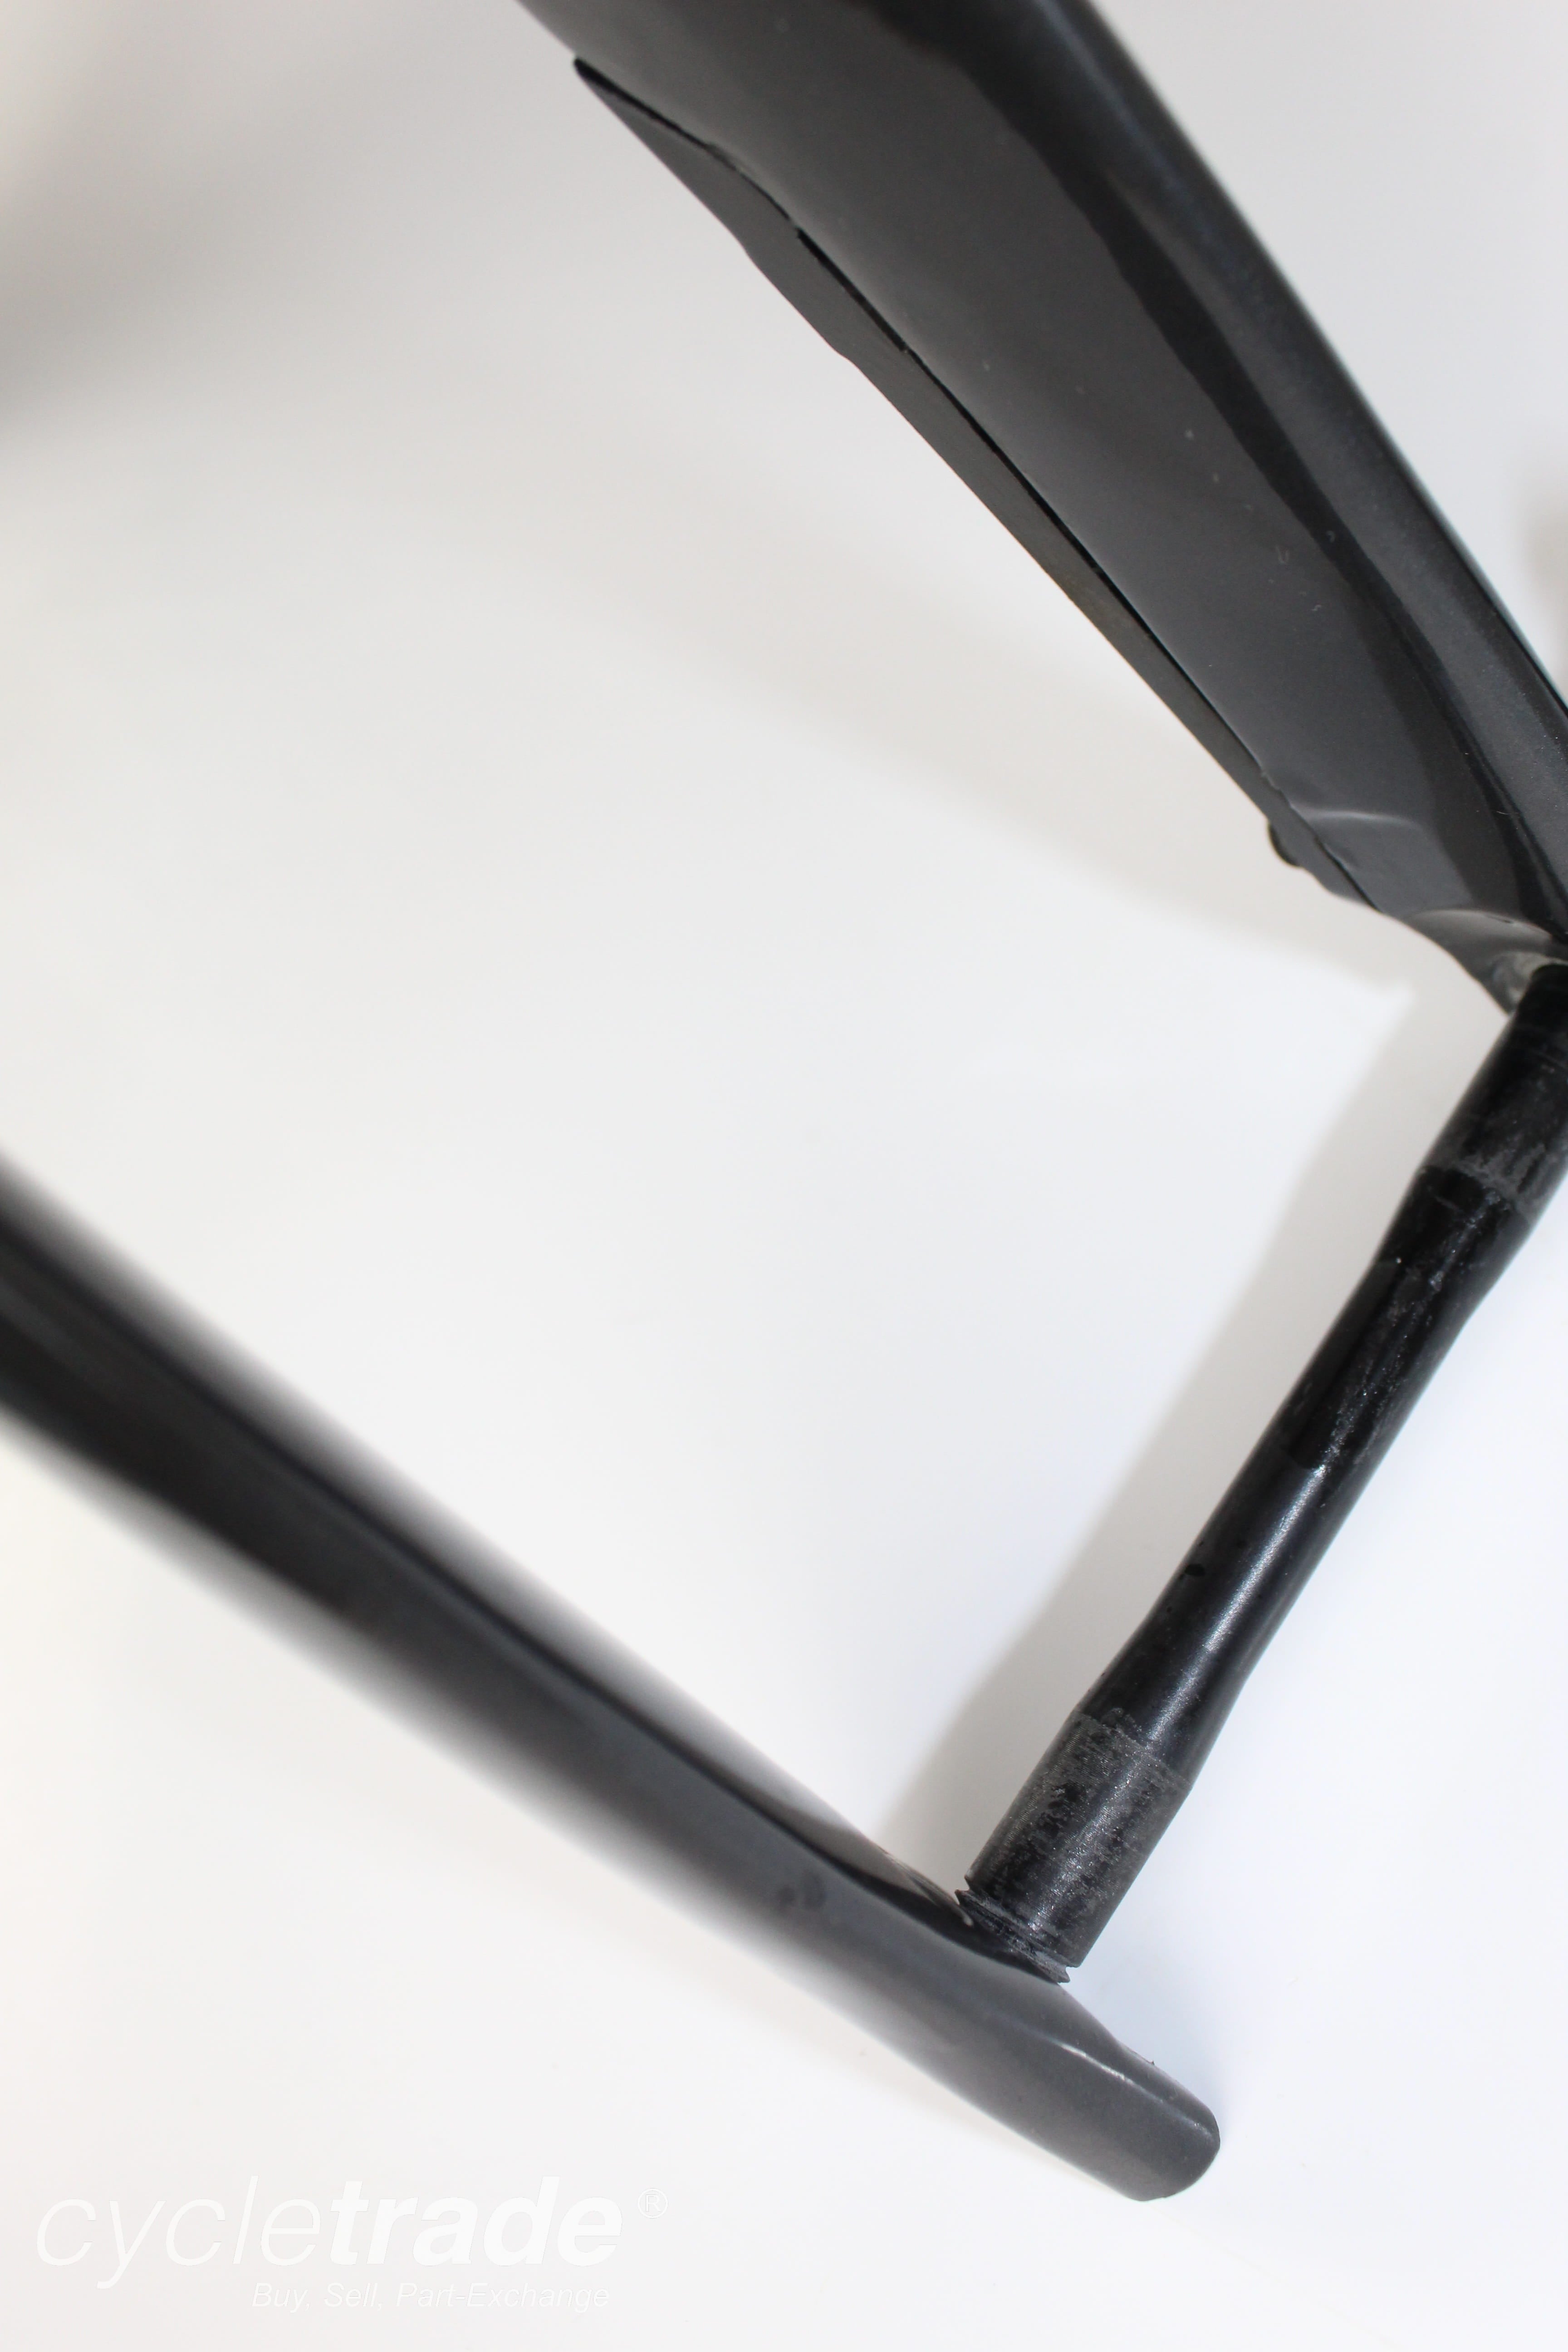 Carbon Disc Frameset- Giant Propel Advanced Pro 1 Thru Axle XL- Used